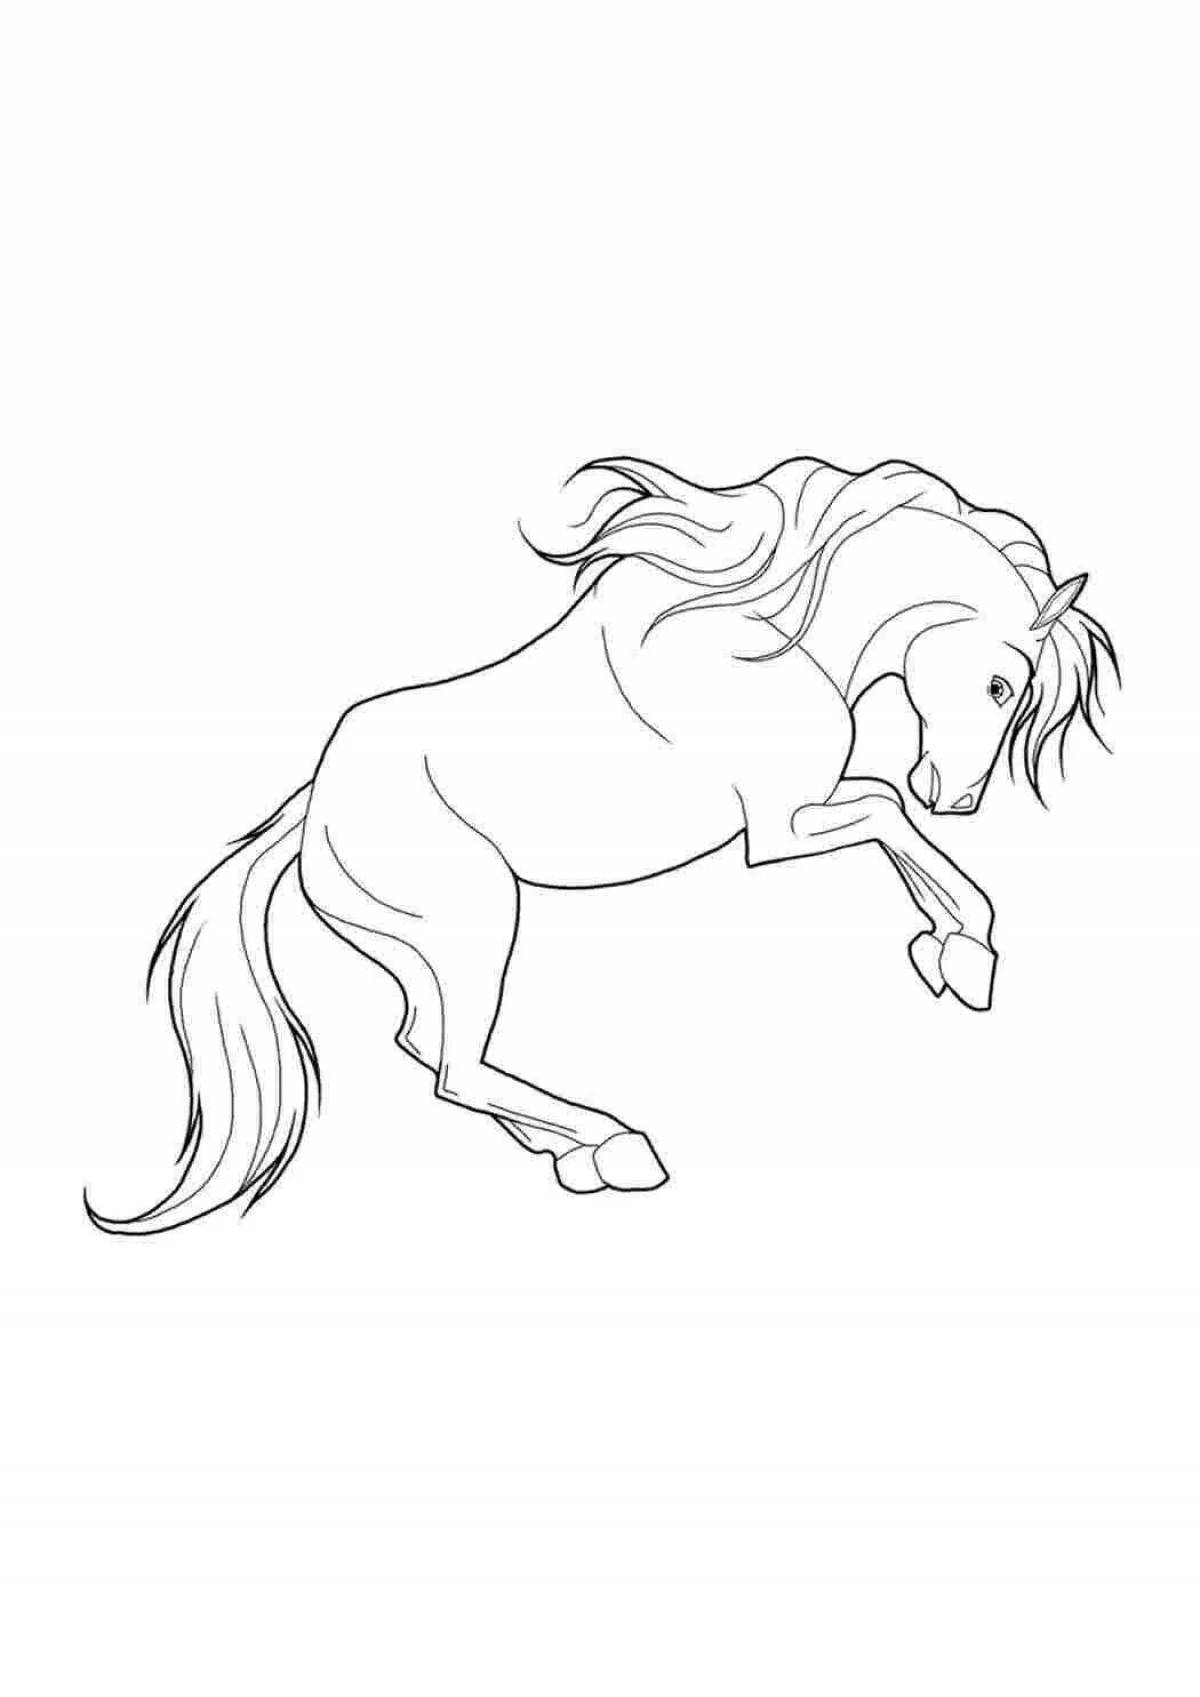 Shiny spirit horse coloring book